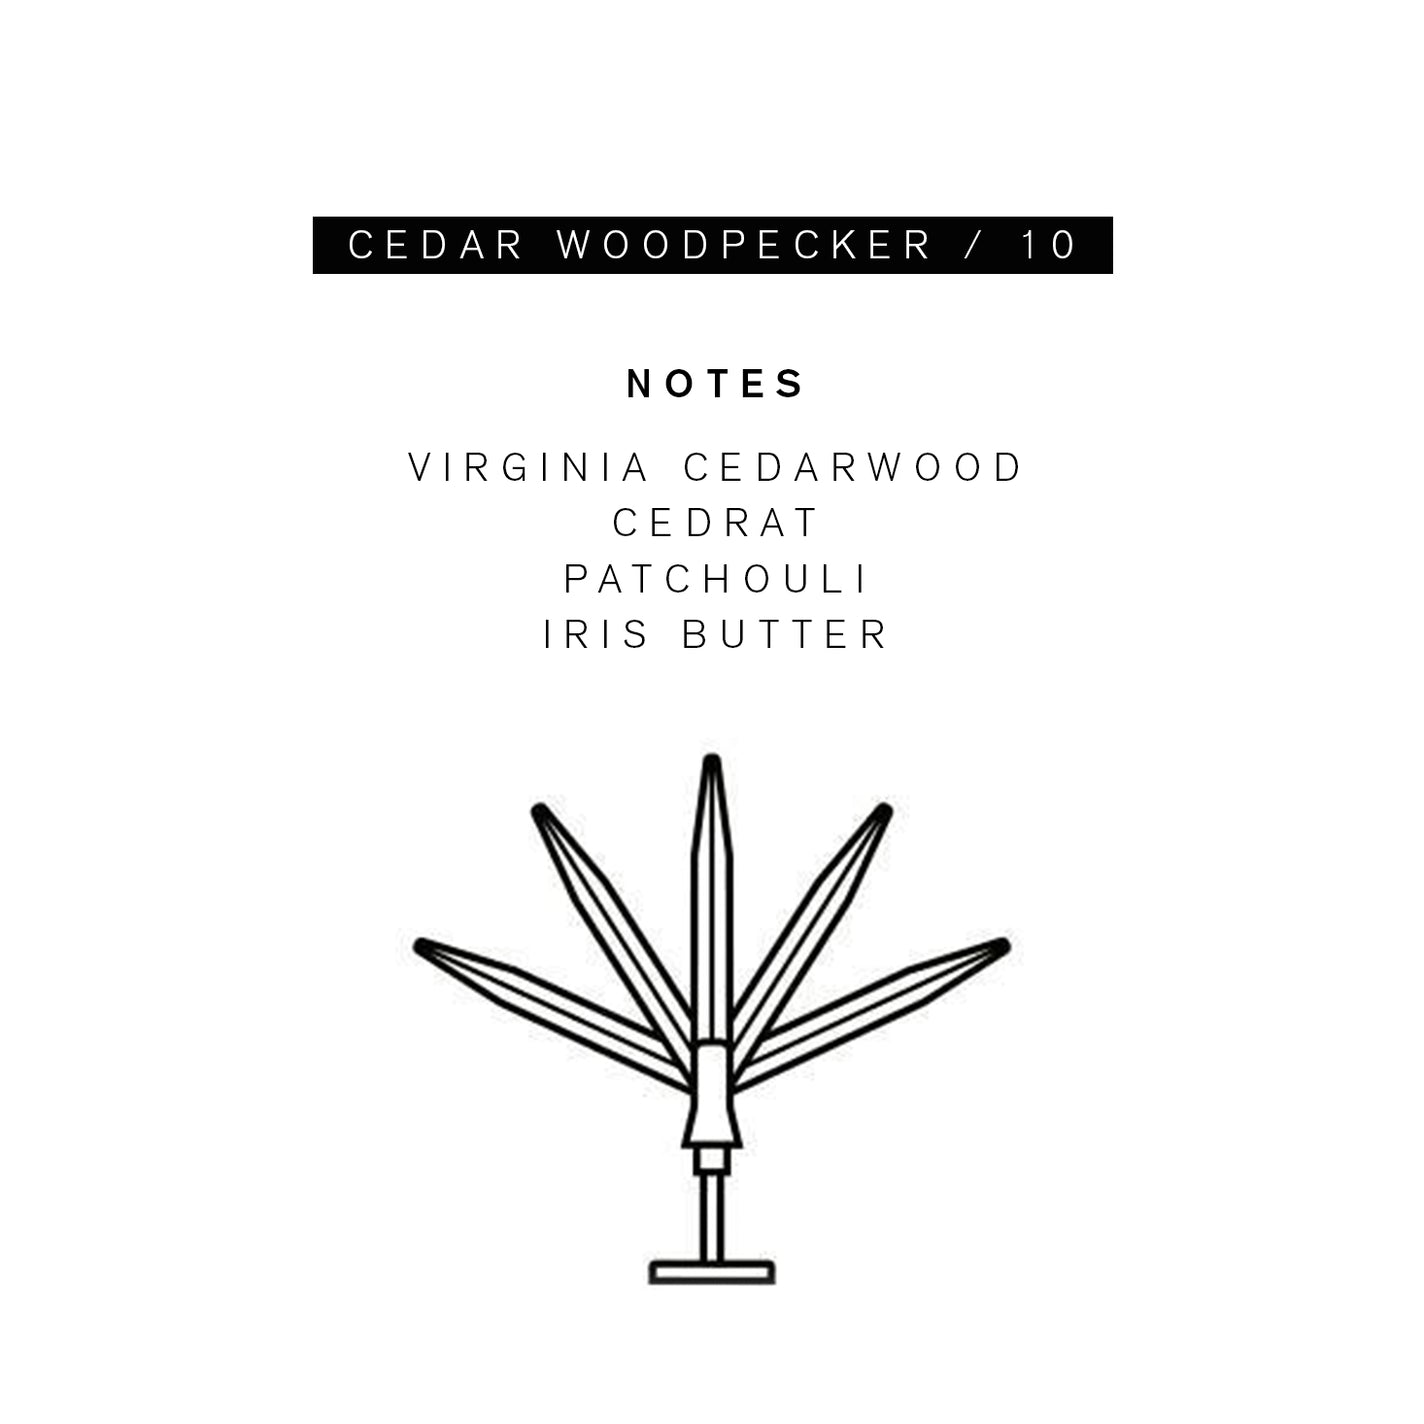 Sample Vial - Parle Moi Cedar Woodpecker / 10 Eau de Parfum